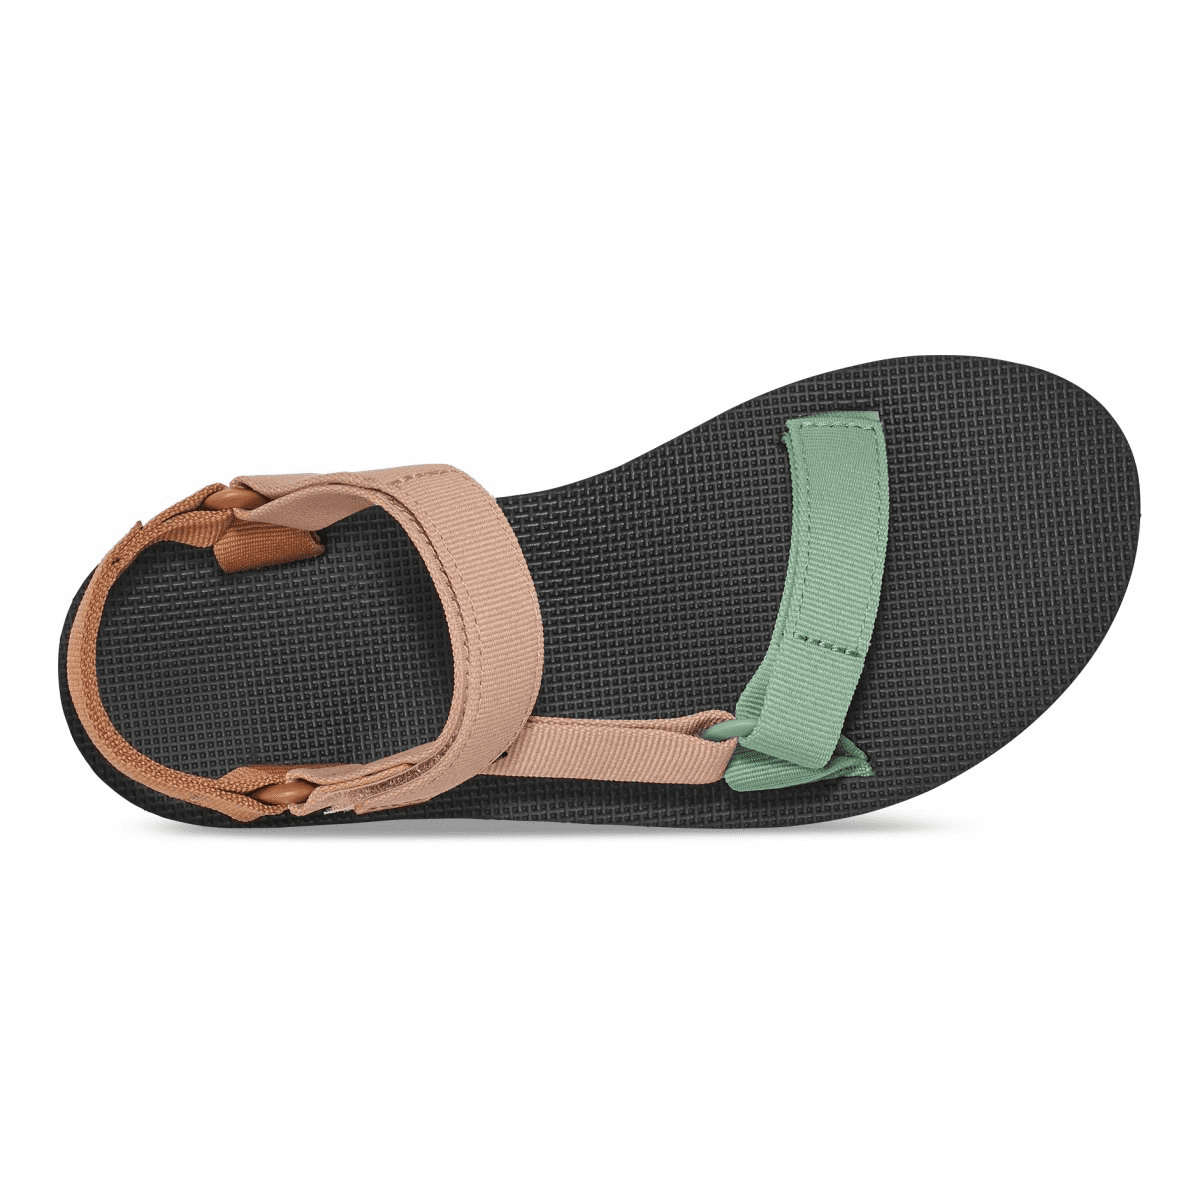 Selected image for TEVA Ženske sandale Midform Universal bež-zelene